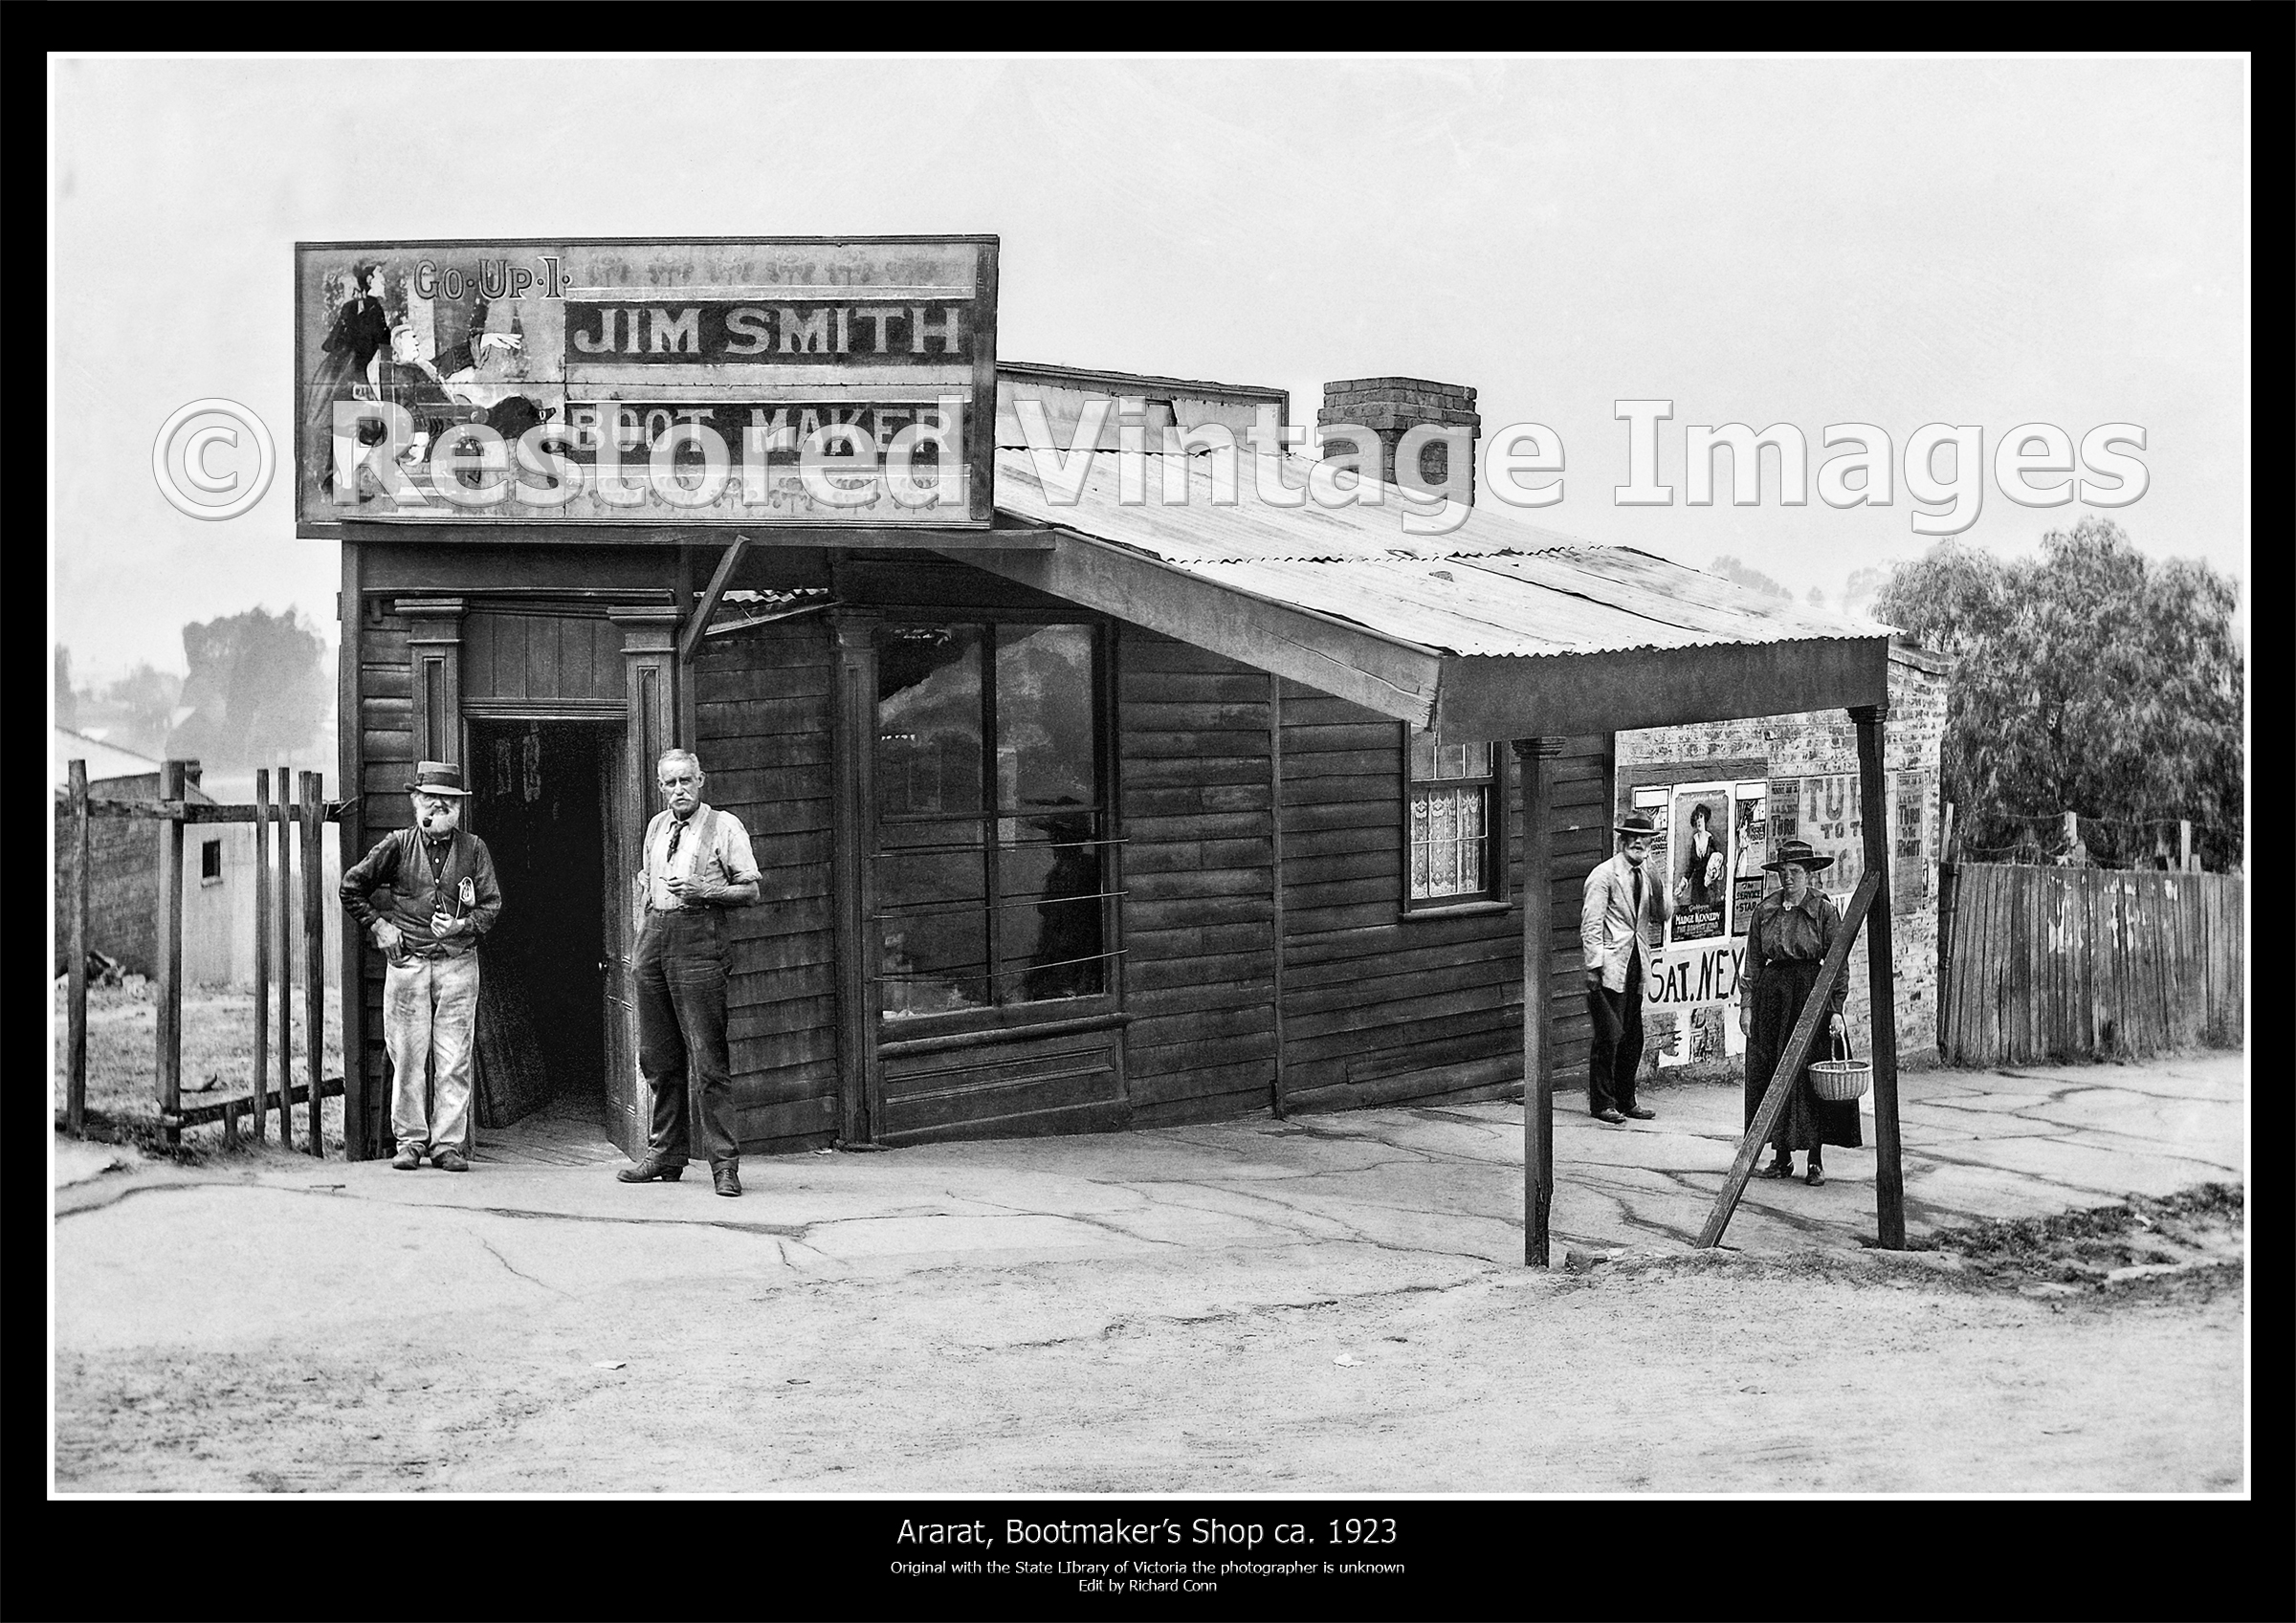 Ararat, Jim Smith’s Bootmaking Shop Ca, 1923